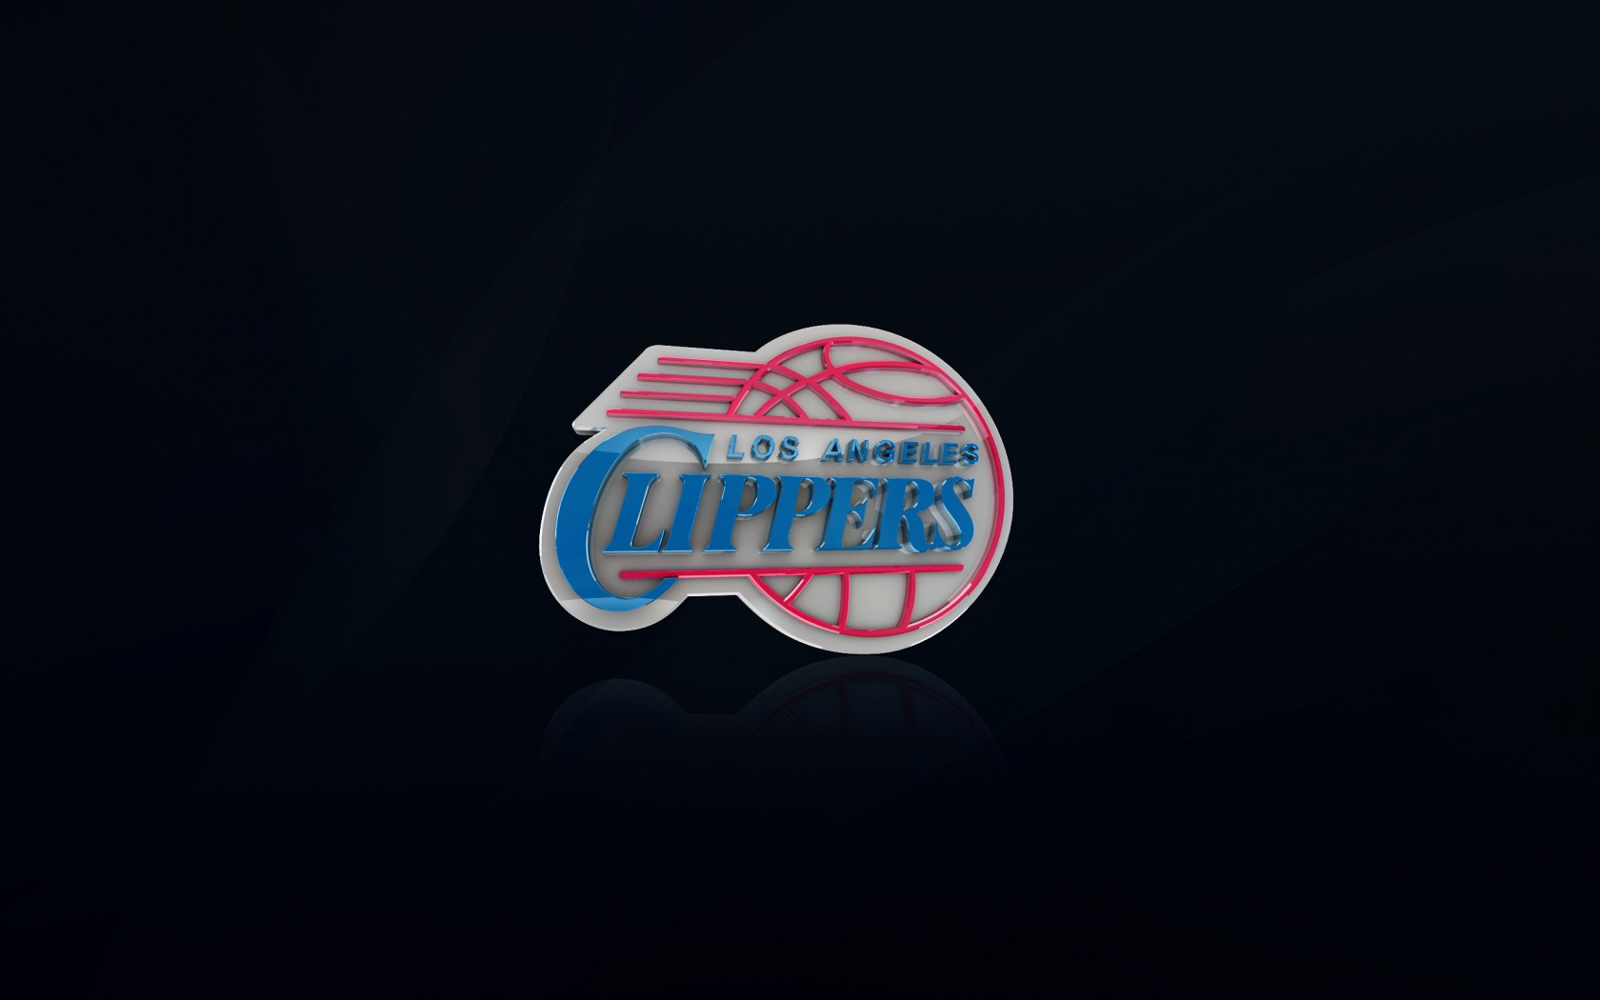 Los Angeles Clippers iPhone Wallpaper - WallpaperSafari